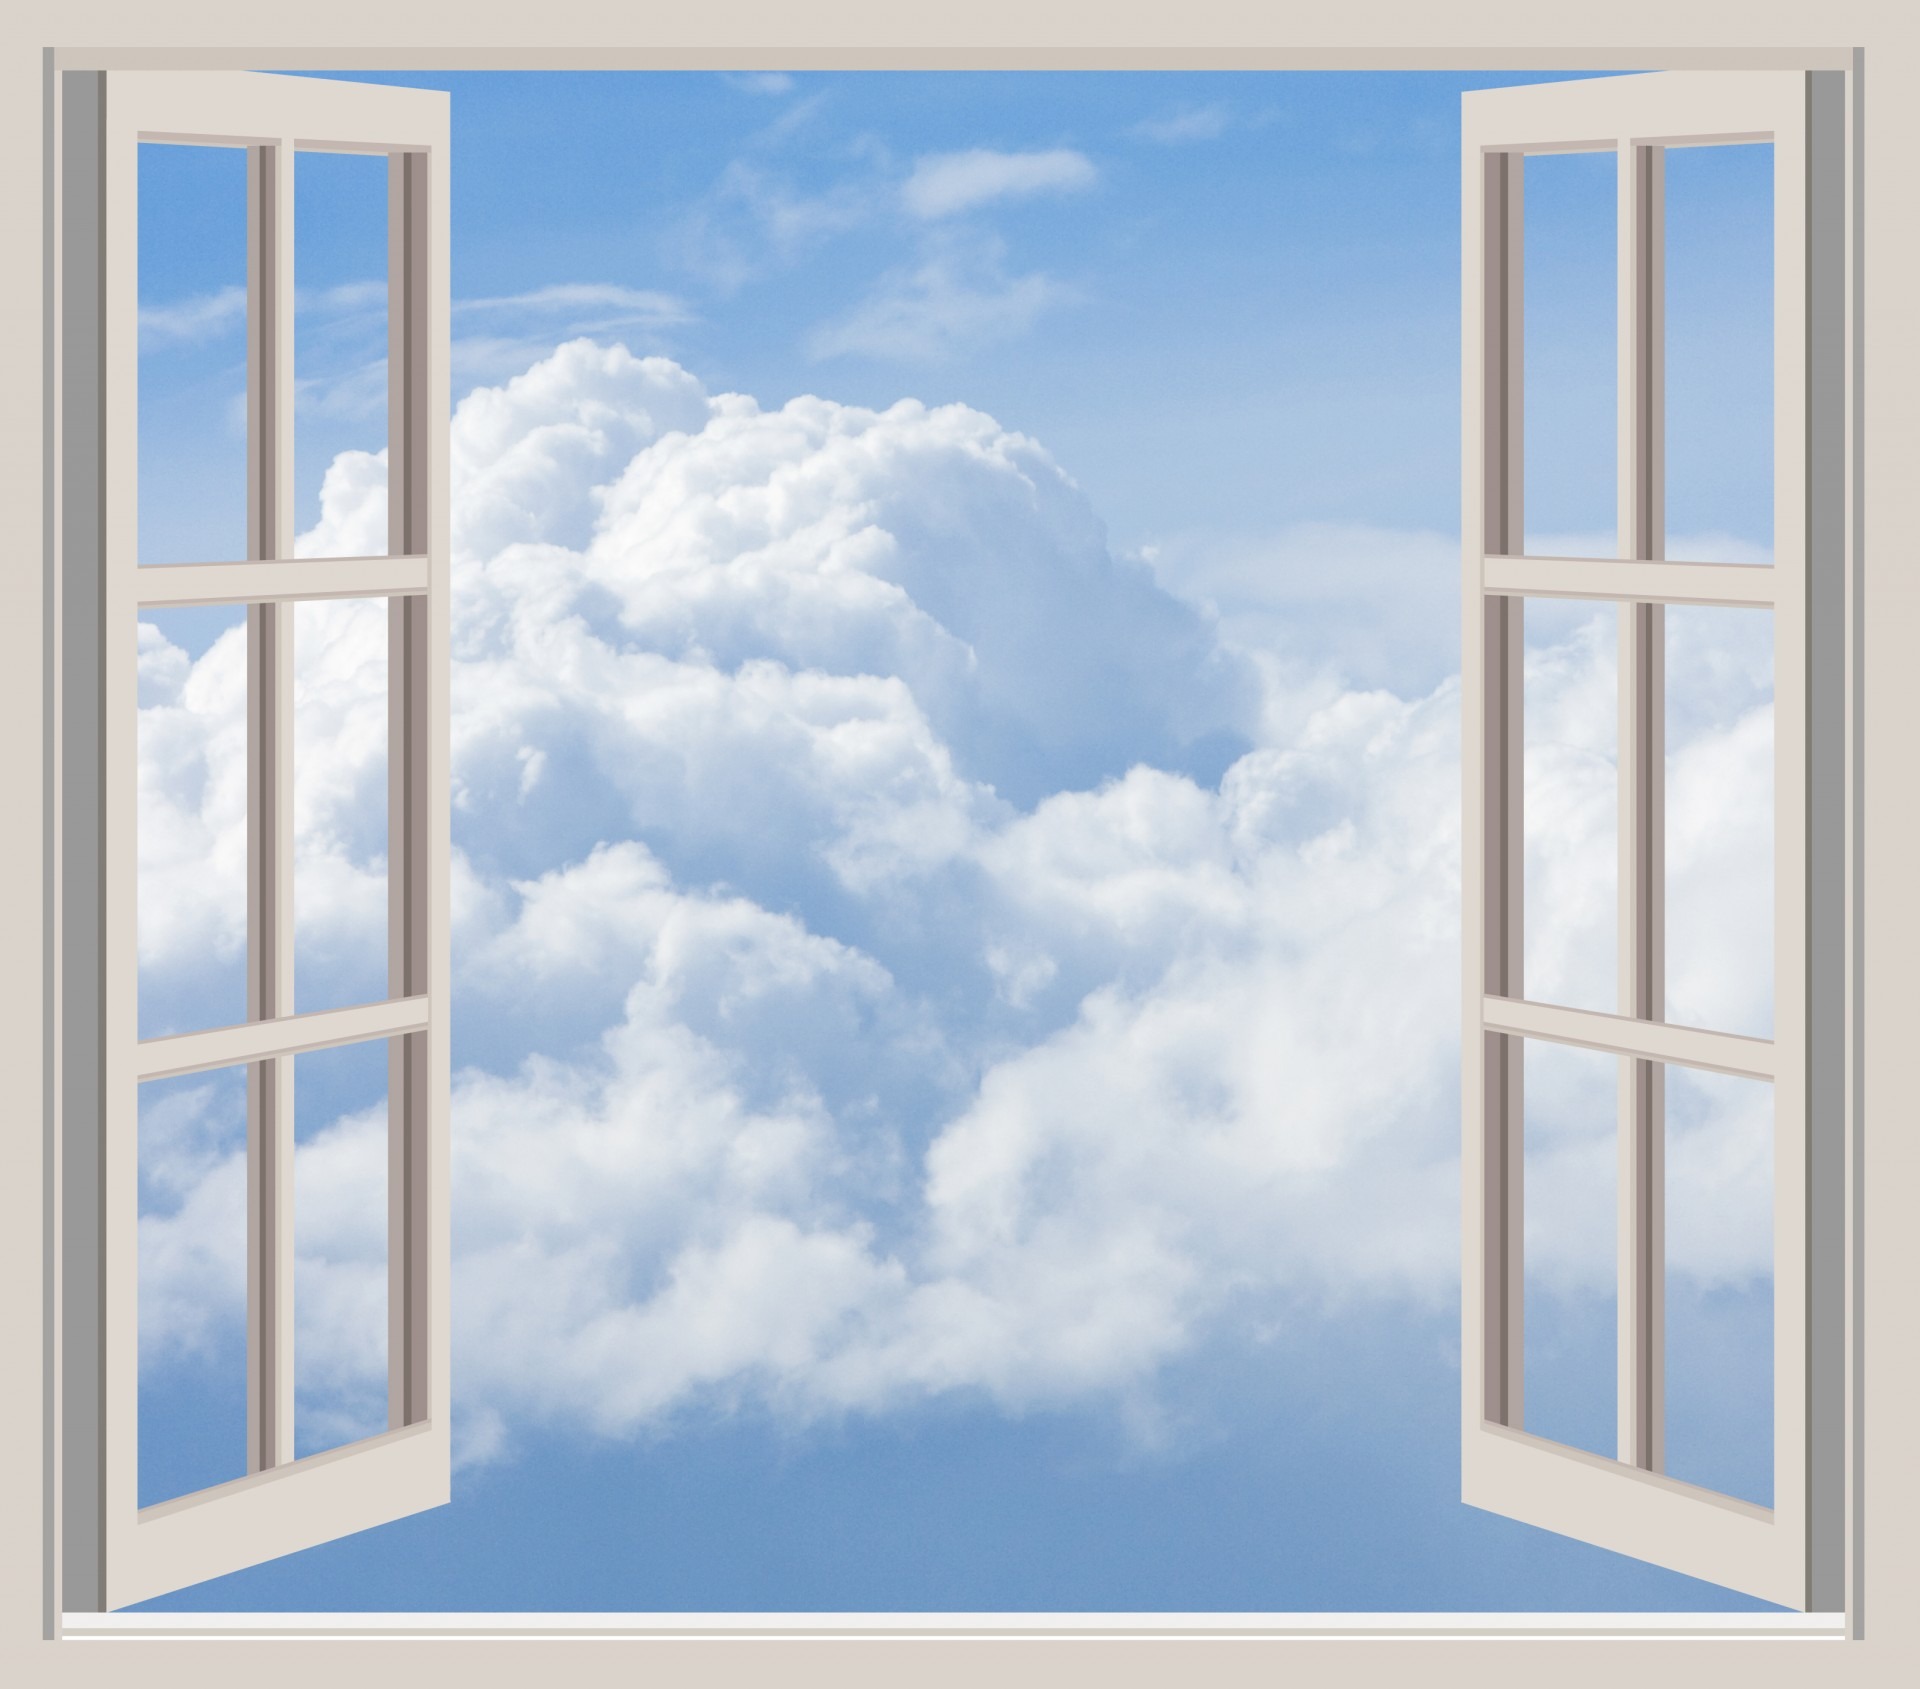 white clouds, window, frame, open, seen through window, scene through window